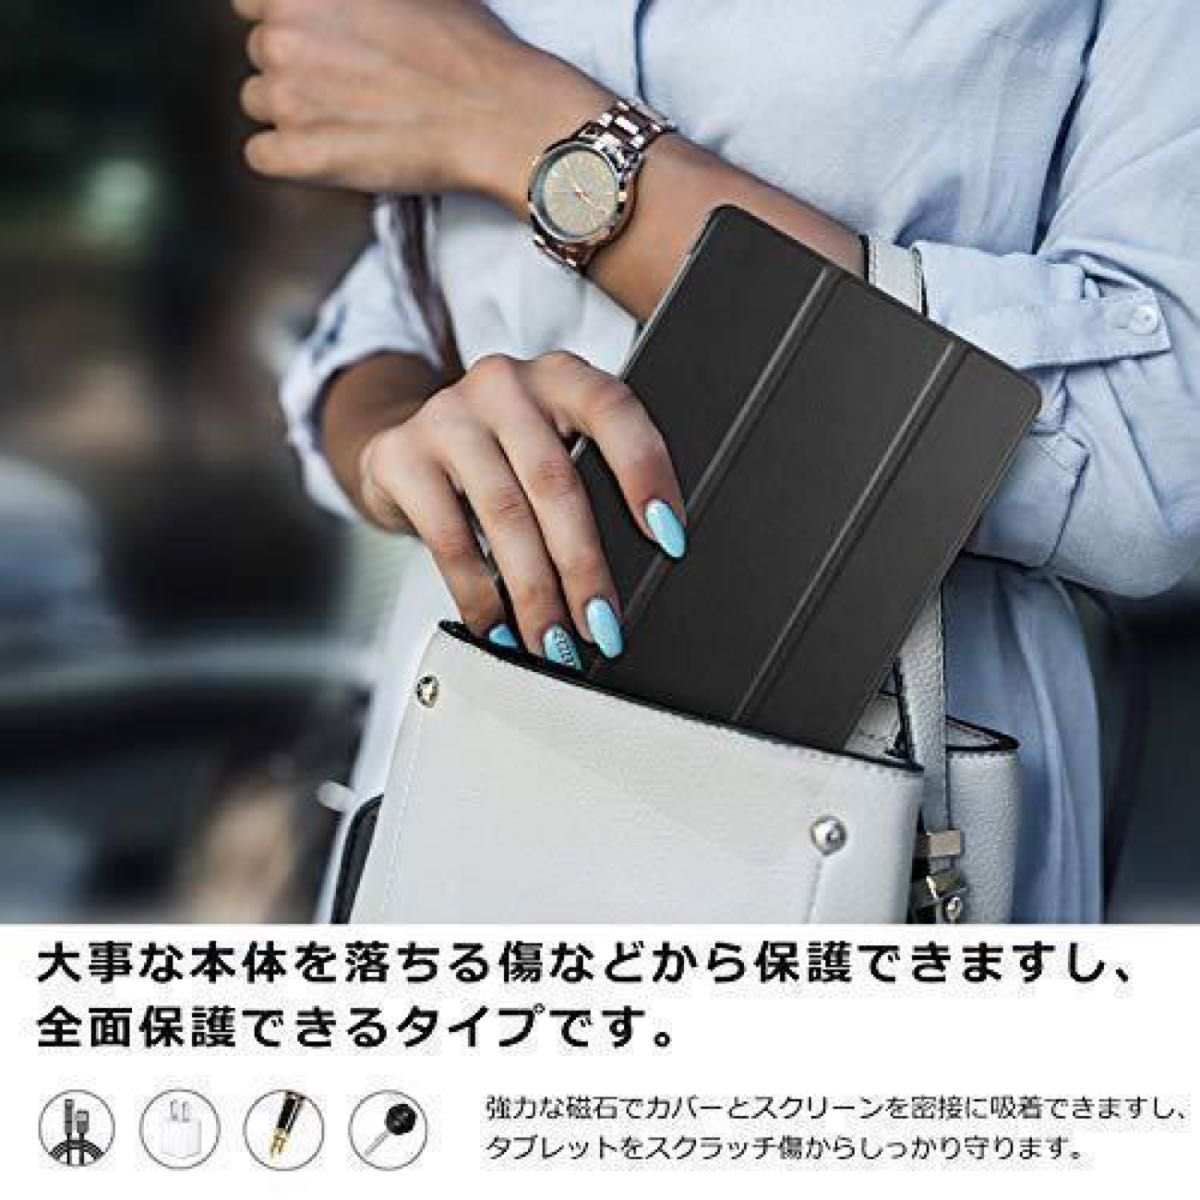 【DC1L】Huawei MediaPad T5 10 タブレット ケース 新型